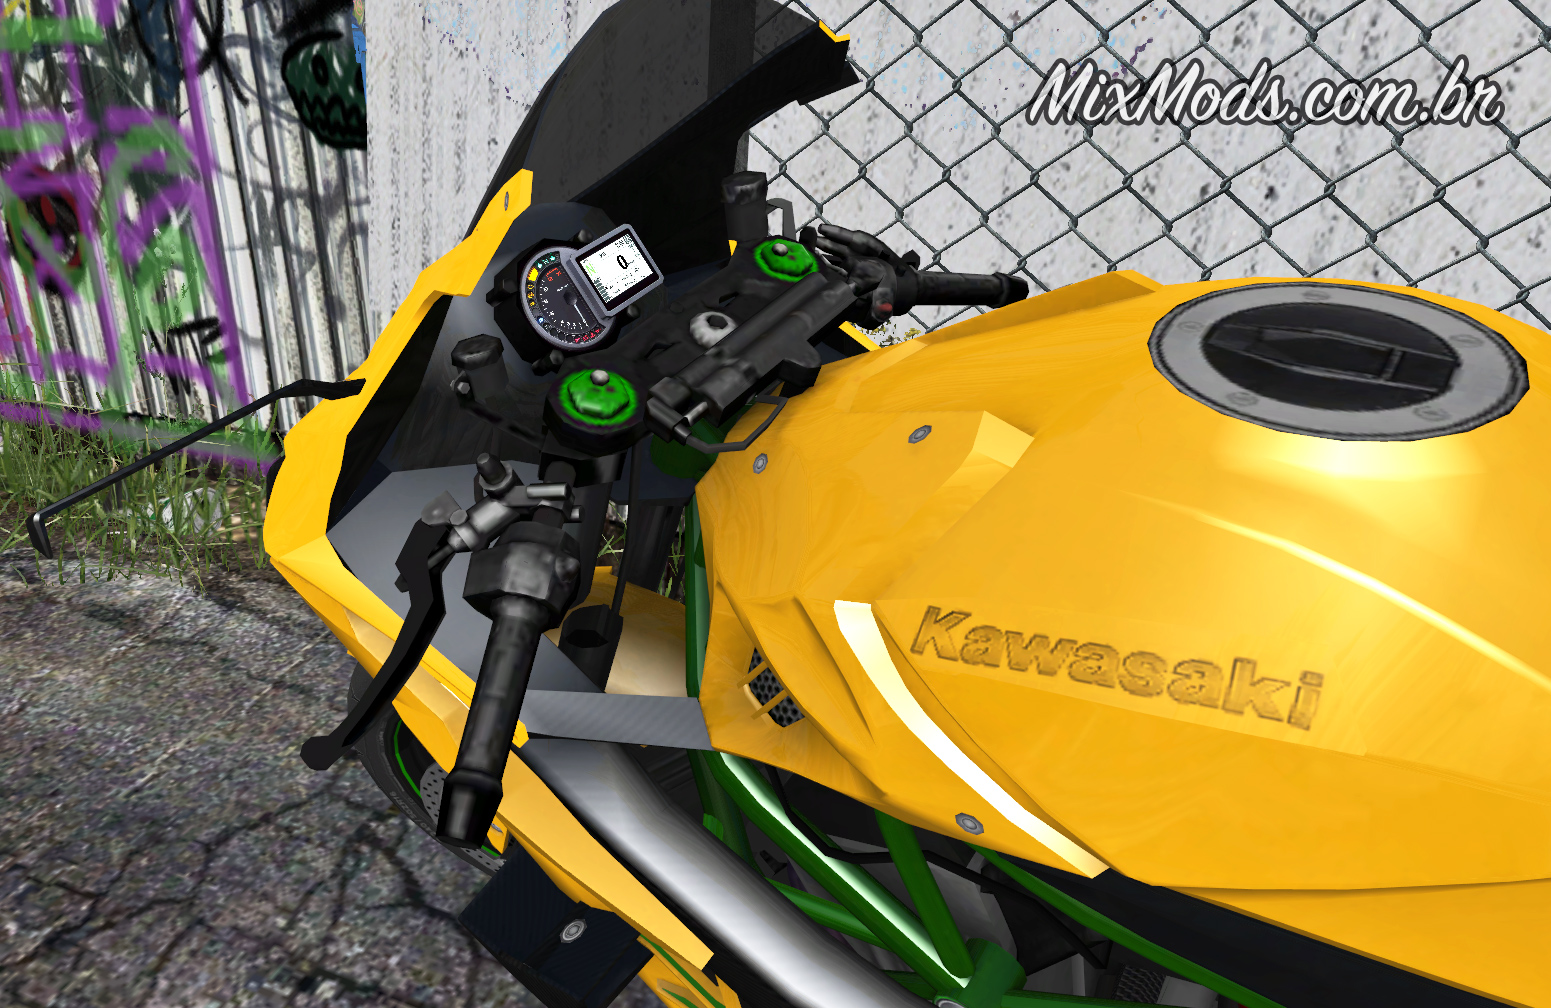 Skin Piloto de Motocross + Moto CR 125 - MixMods